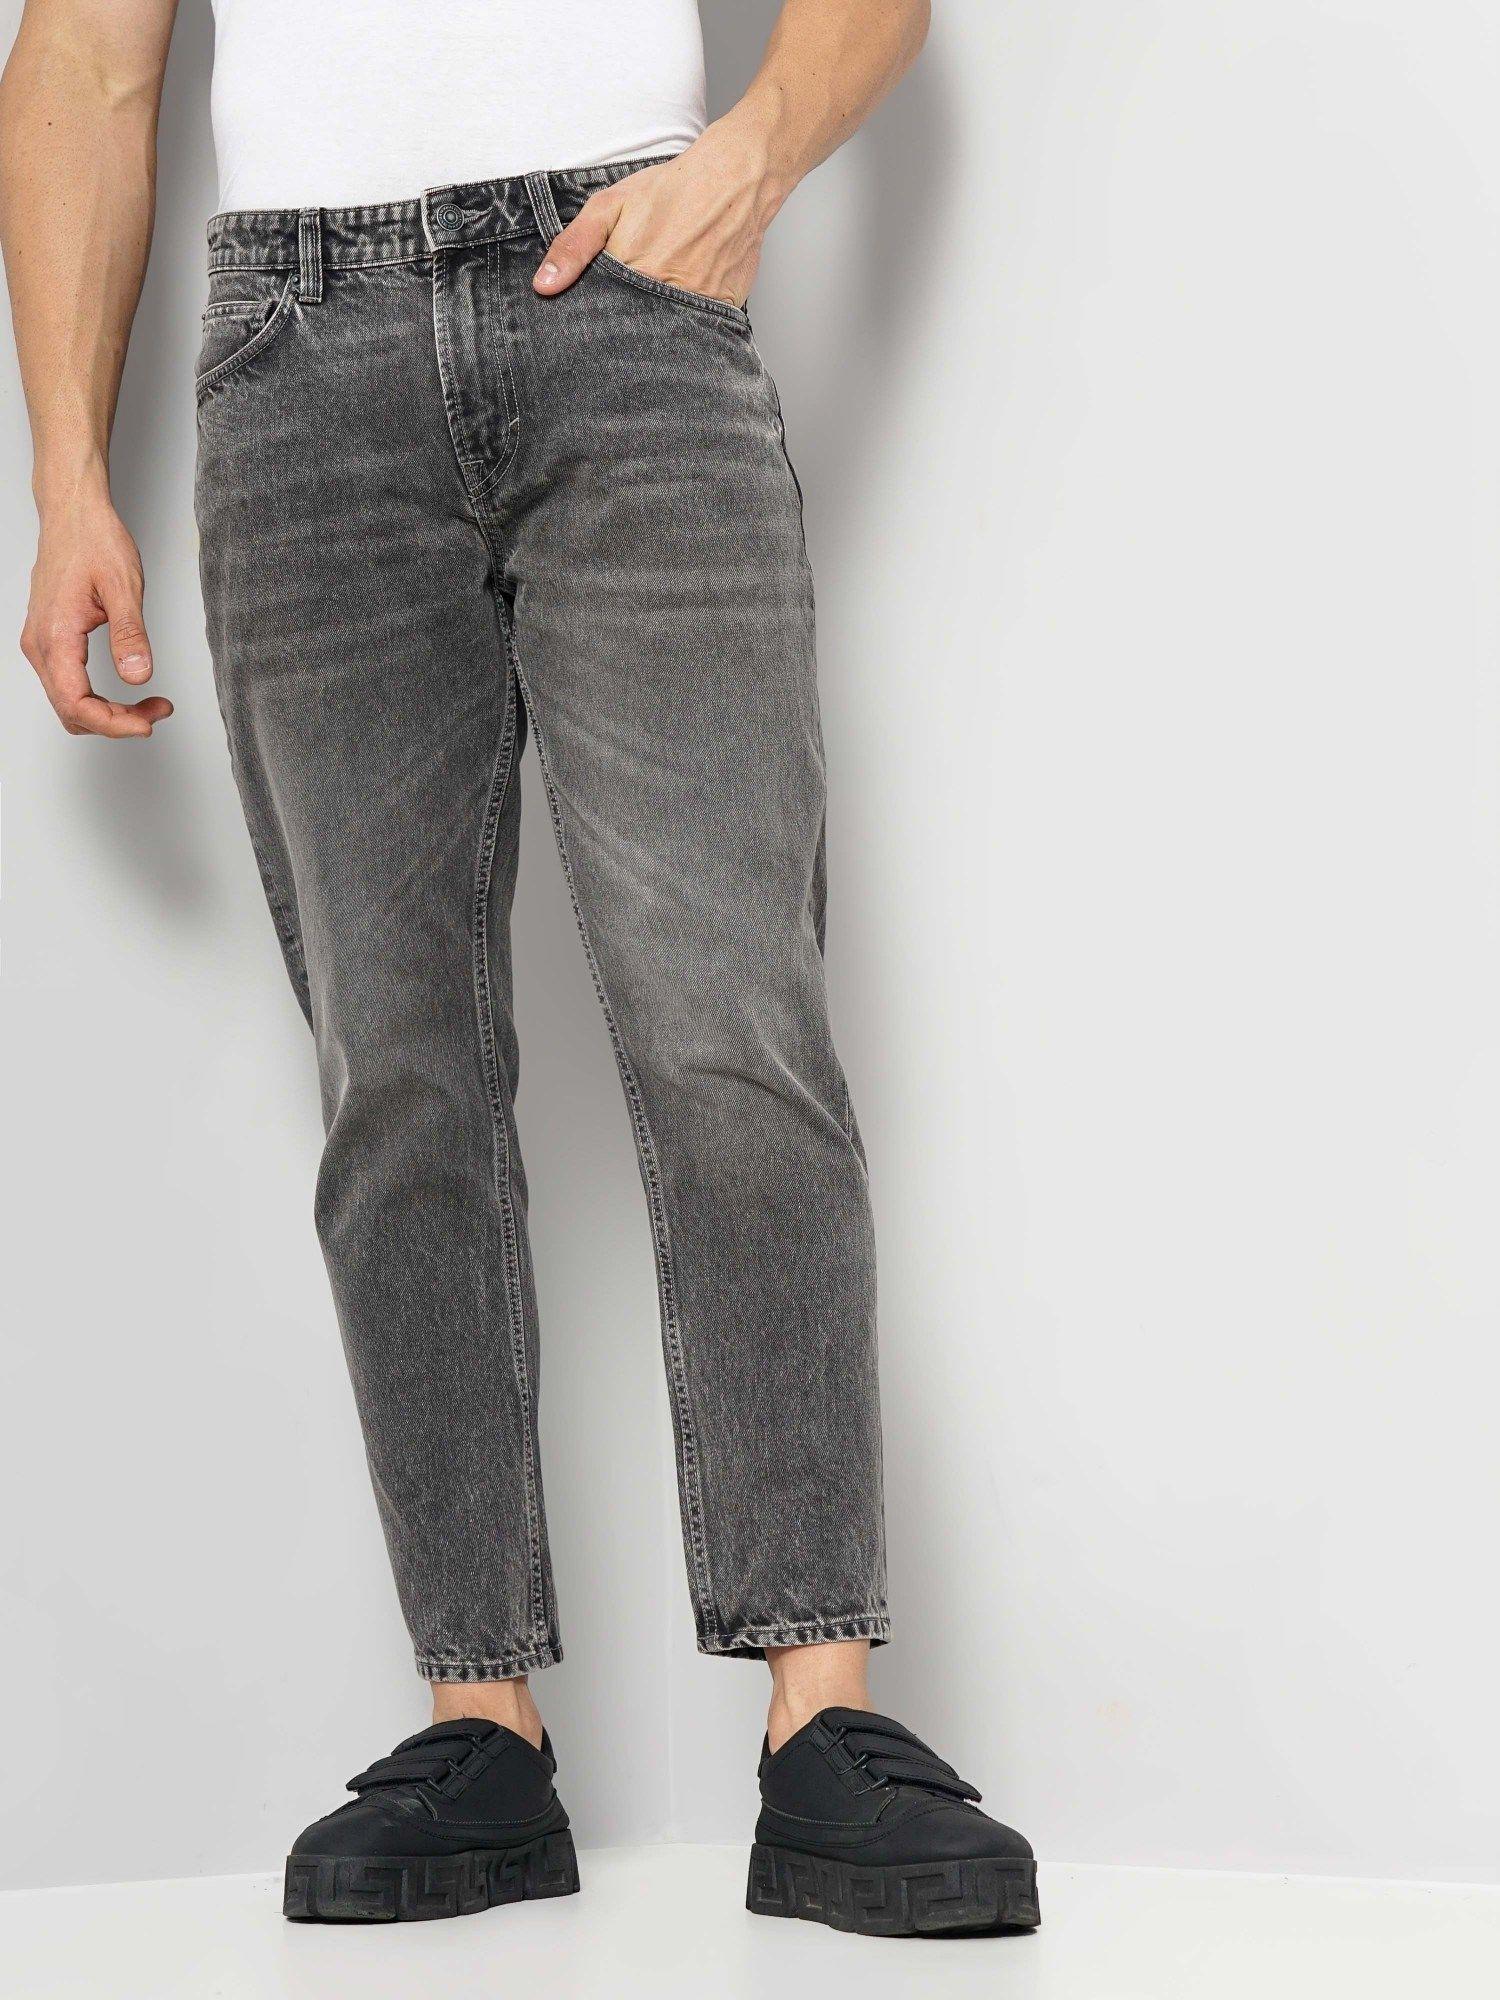 men's-grey-solid-jeans